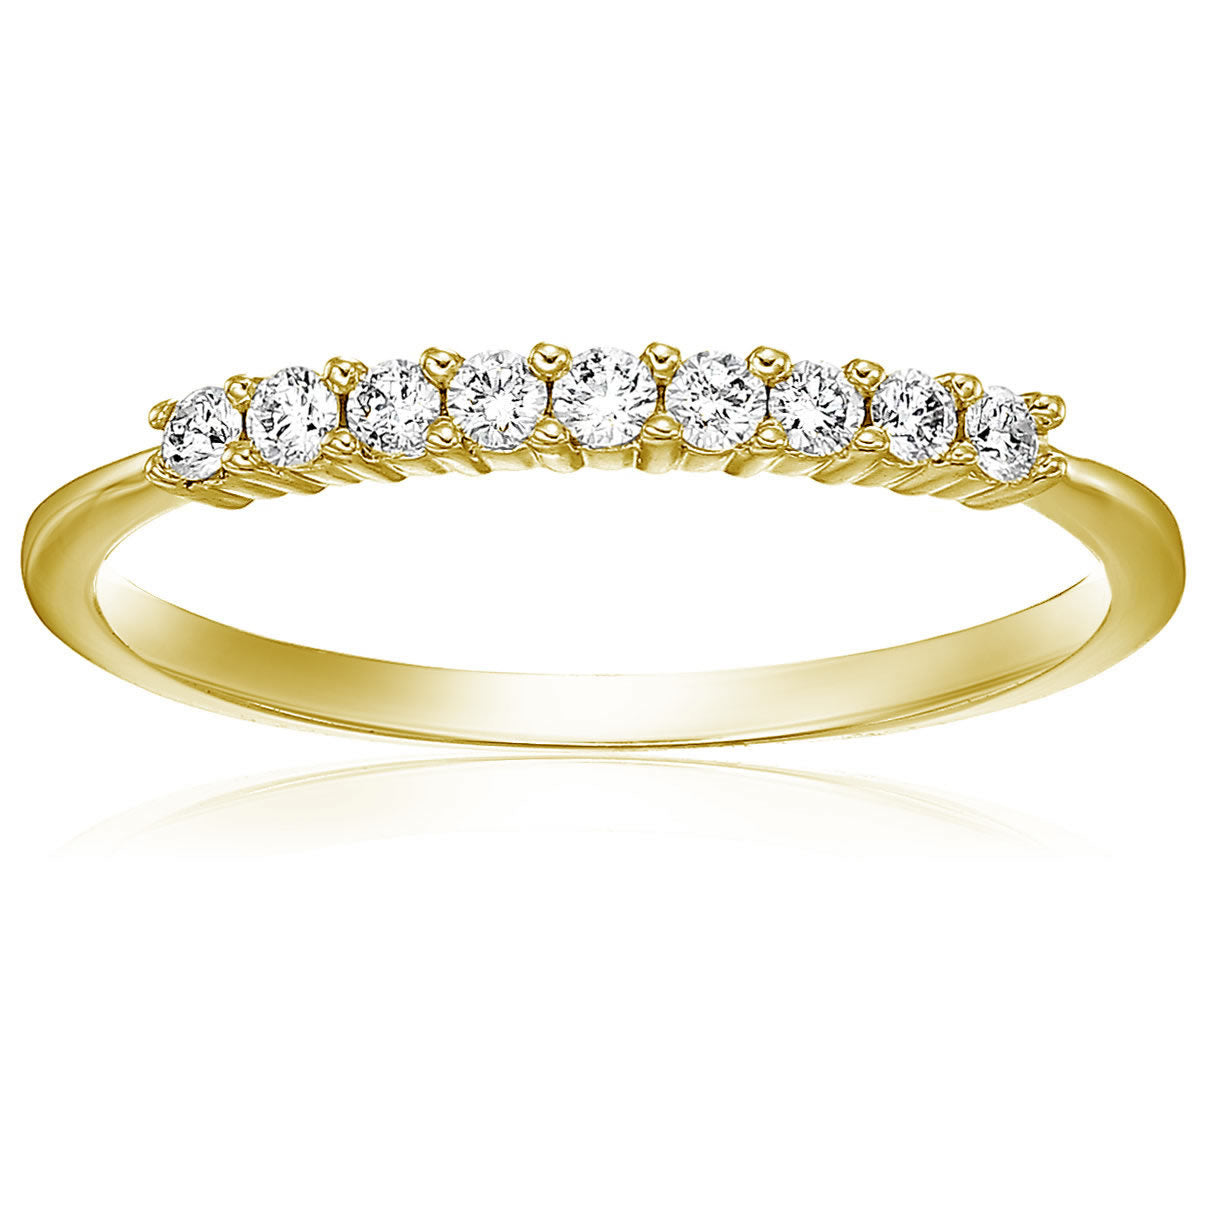 1/5 cttw Diamond Wedding Band for Women, Certified SI2-I1 Diamond Wedding Band in 14K White Gold 9 Stones, Size 5-9